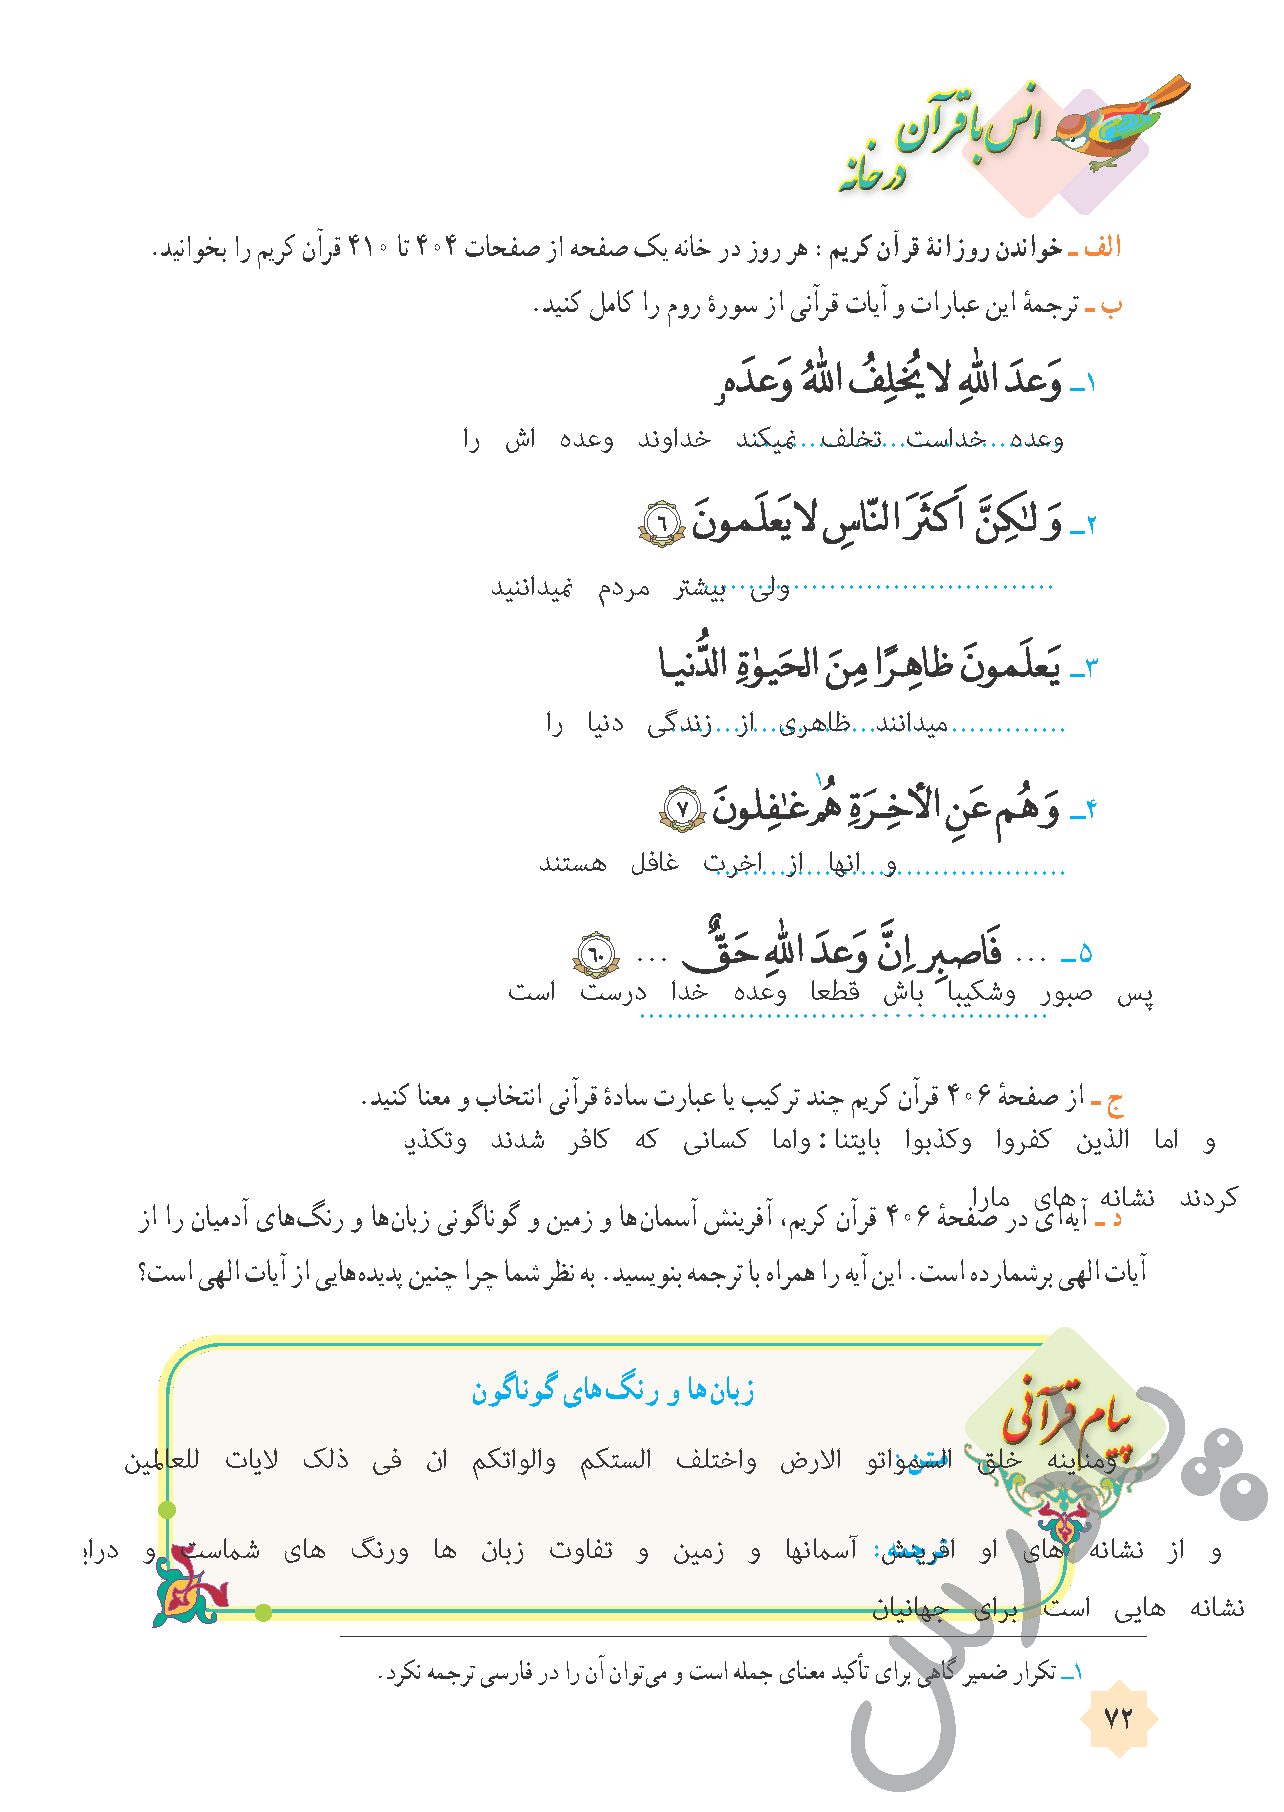 جواب فعالیت سوم درس 7 قرآن هشتم - جلسه اول